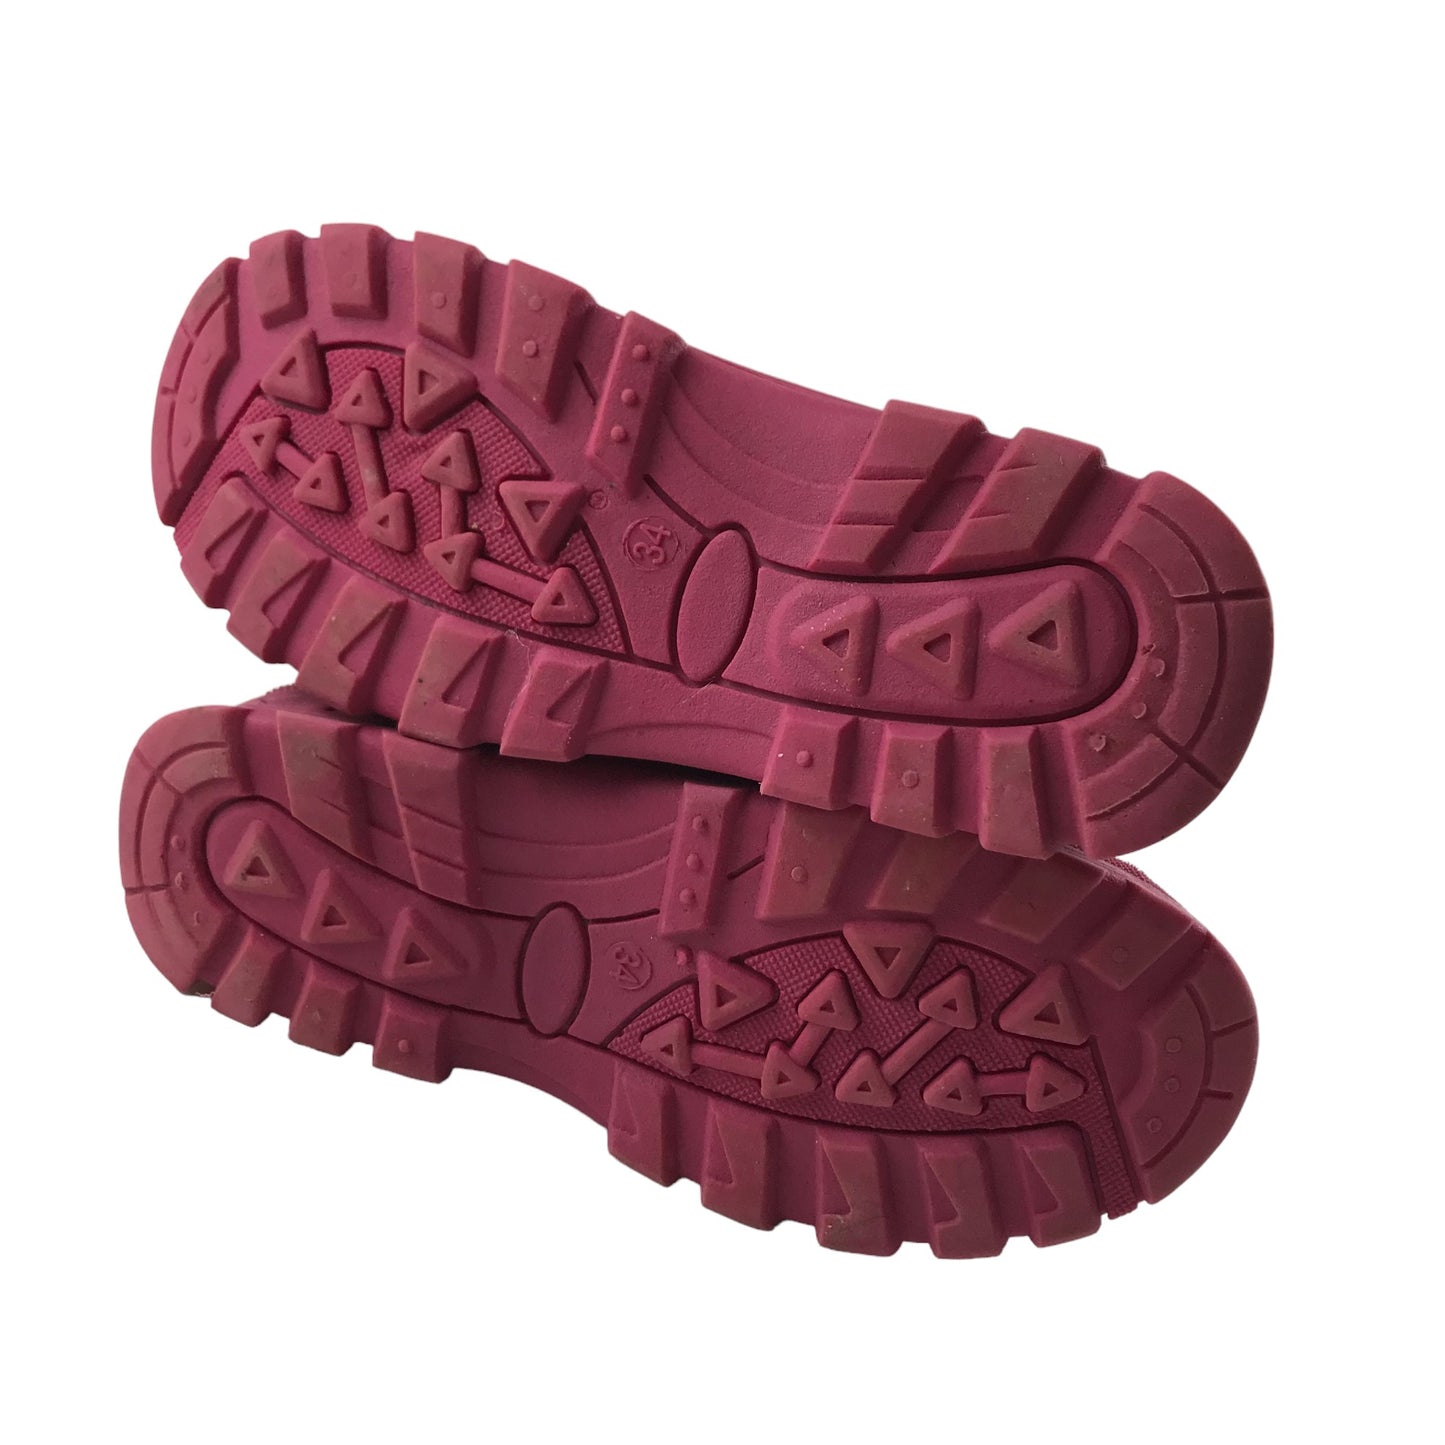 Trespass Snow Boots Shoe Size 2 Pink Floral Faux Fur Waterproof